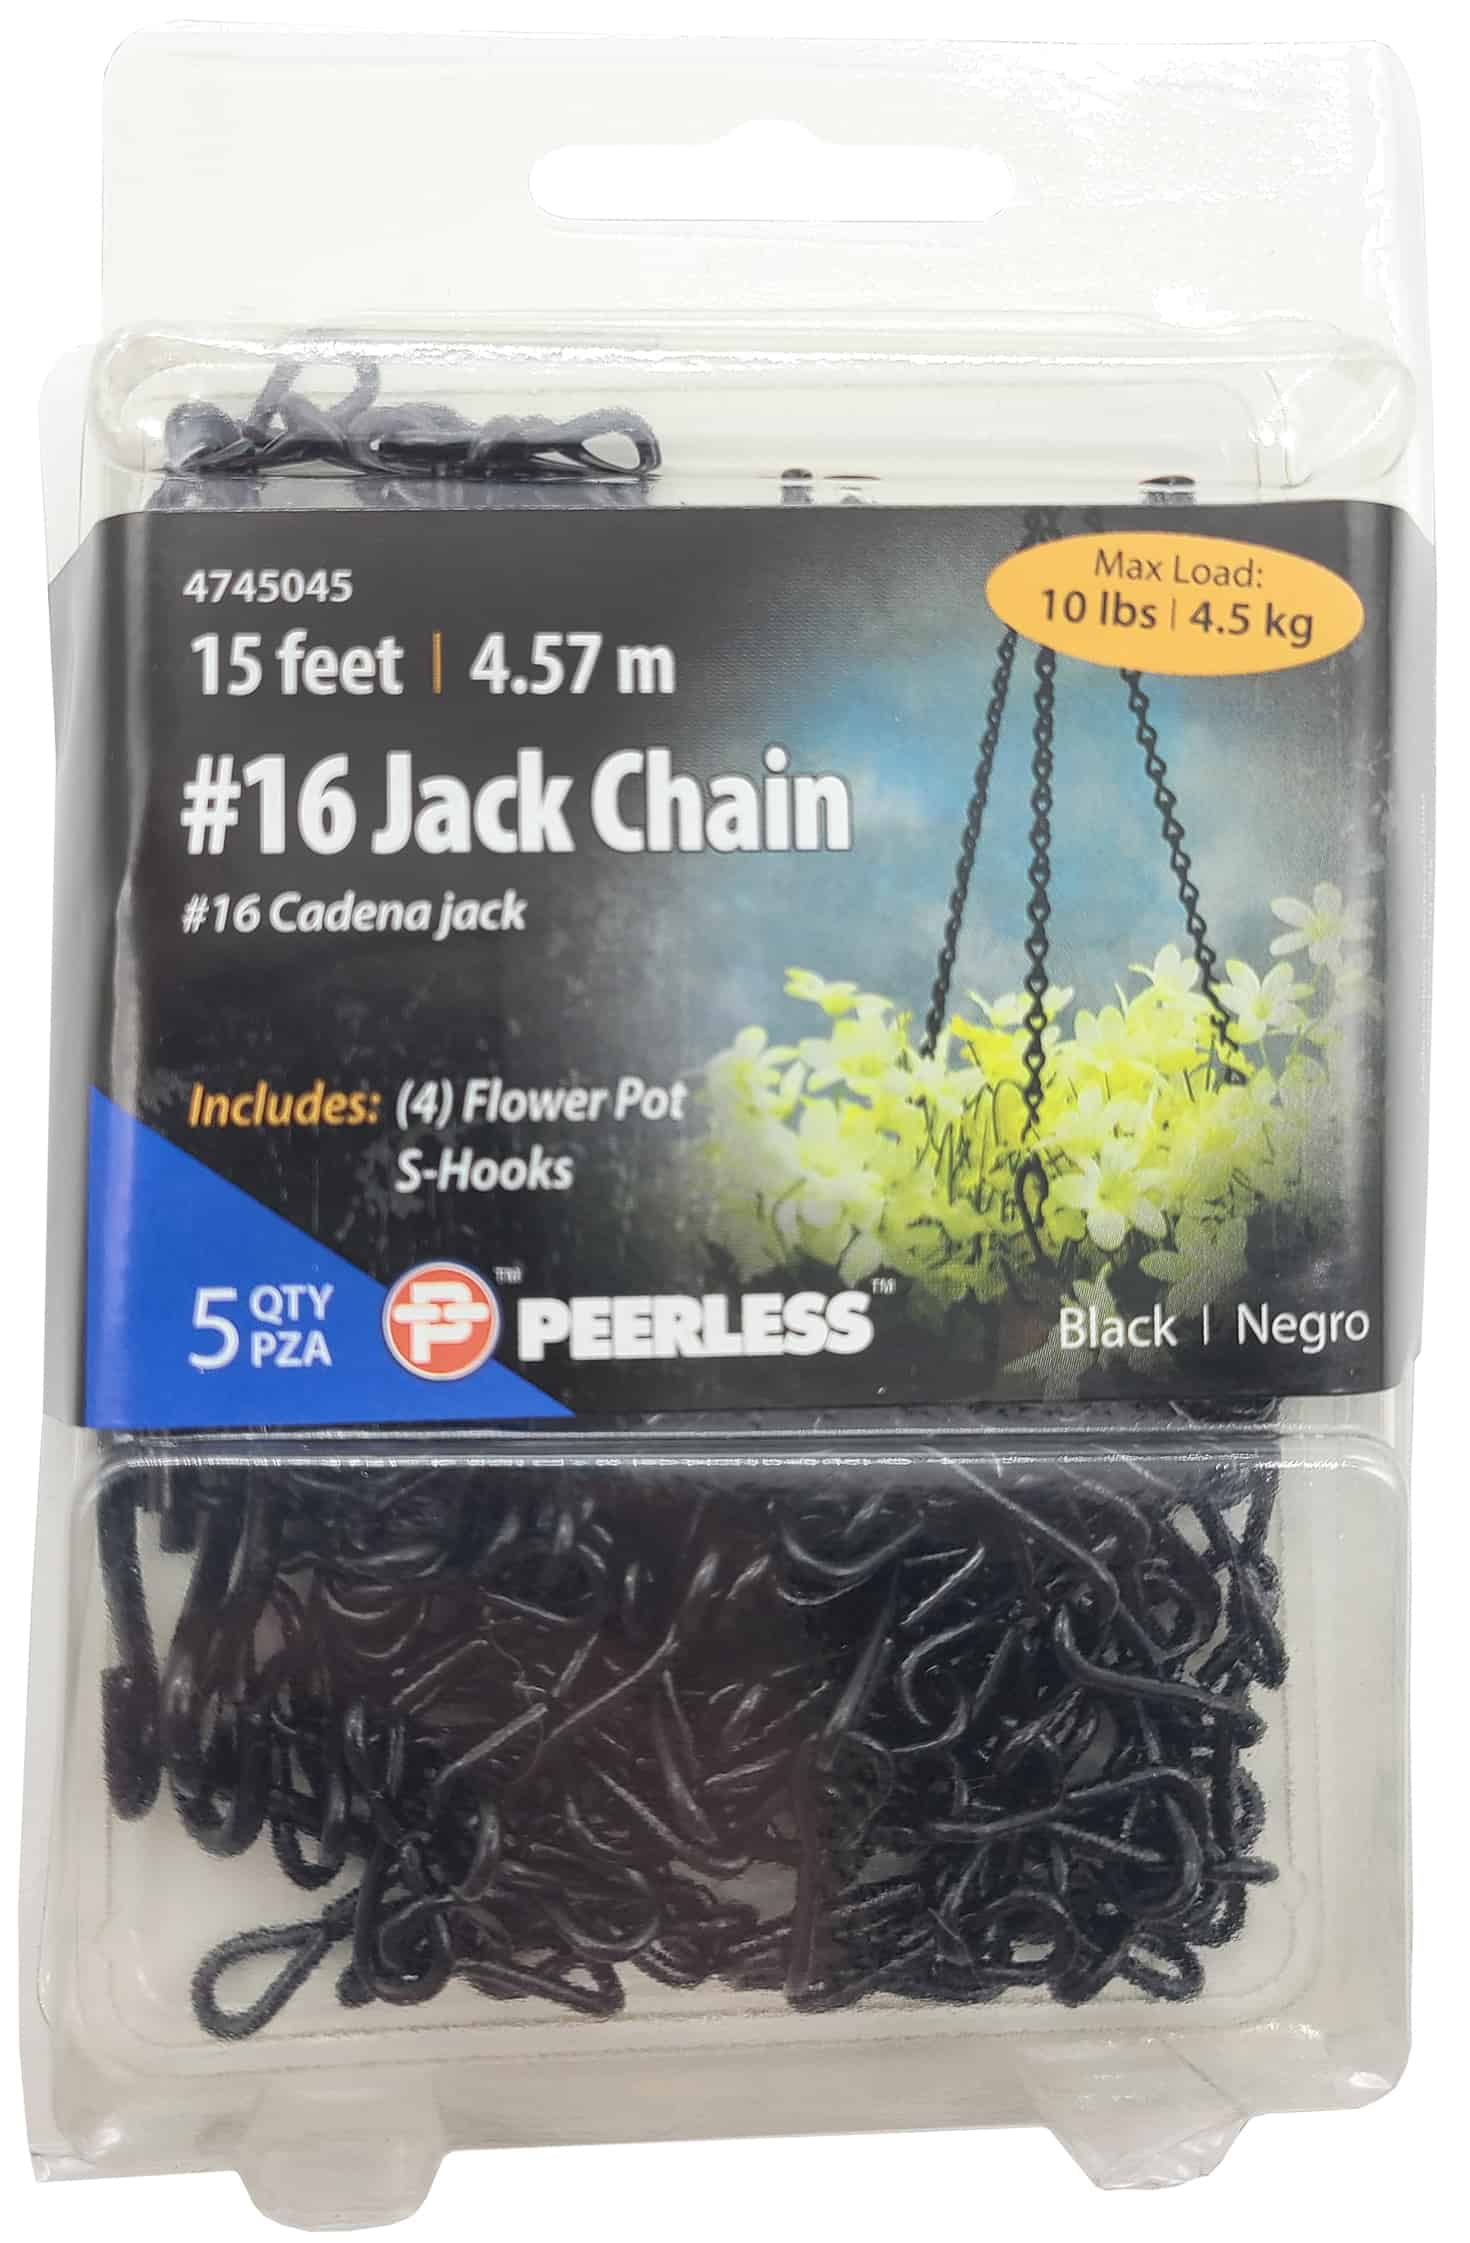 Peerless Chain #16 Black Jack Chain Kit 15', #4745045